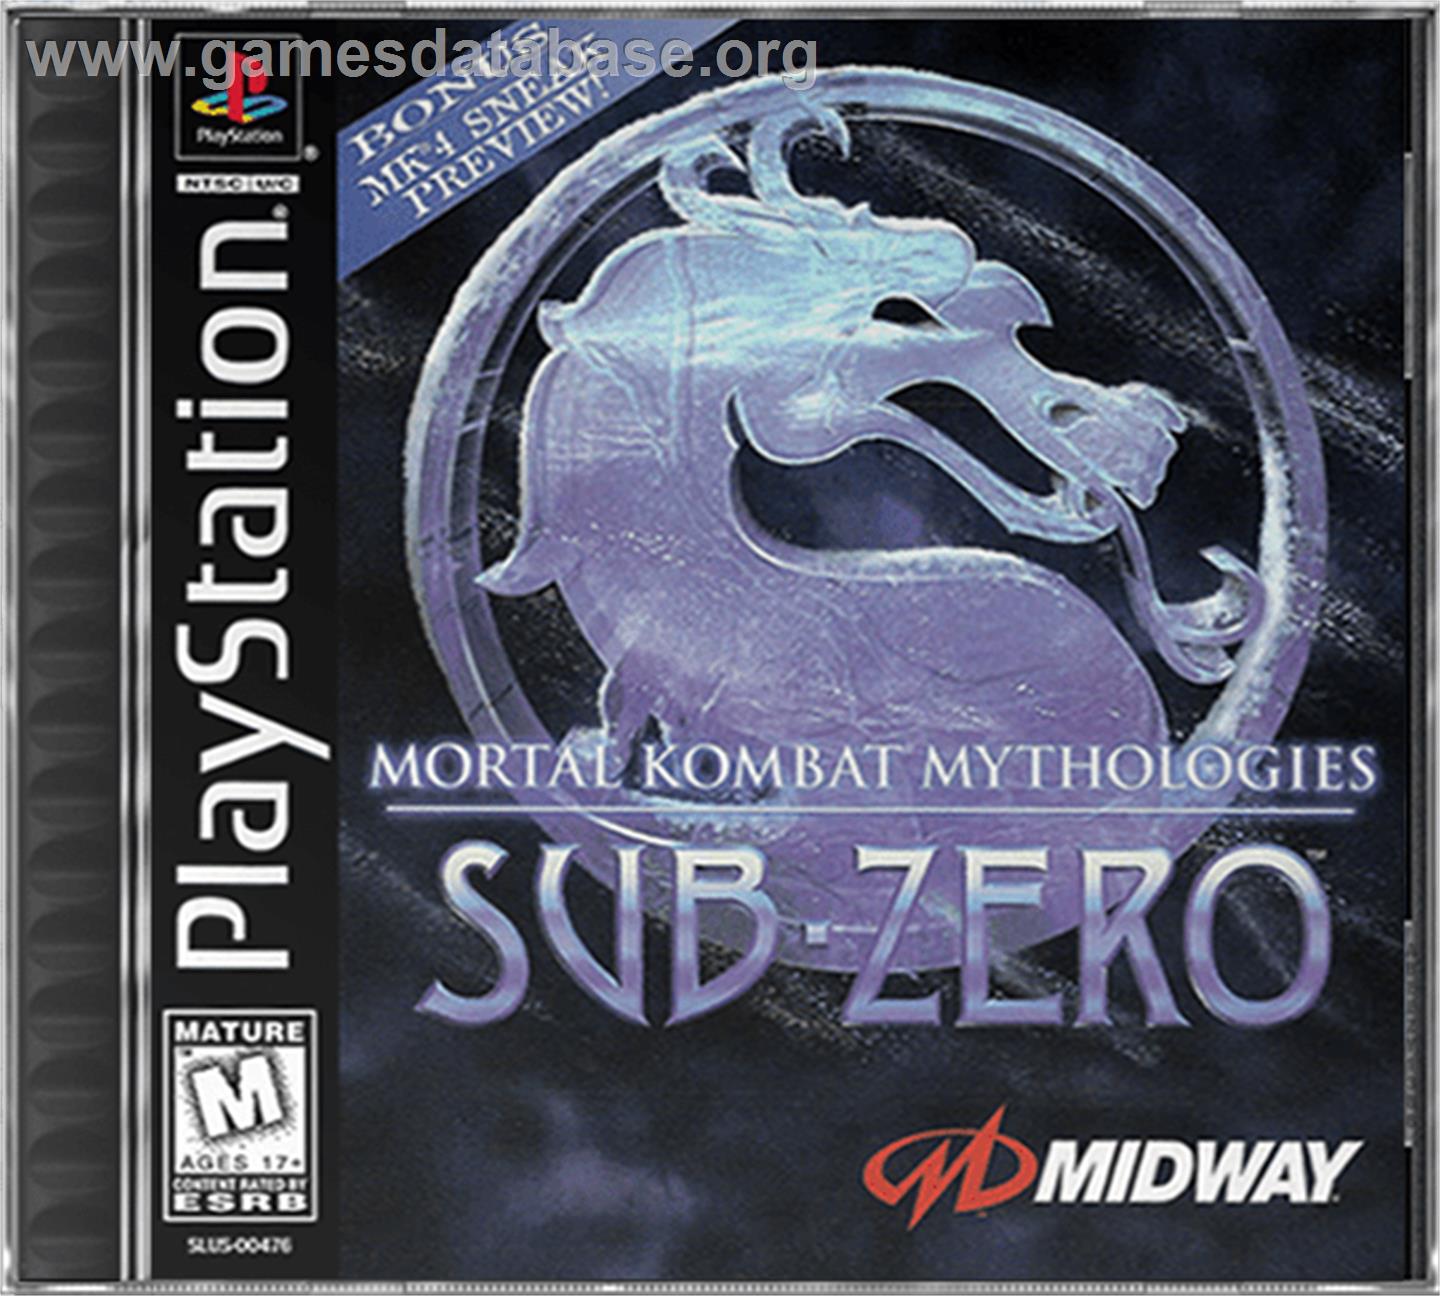 Mortal Kombat Mythologies: Sub-Zero - Sony Playstation - Artwork - Box